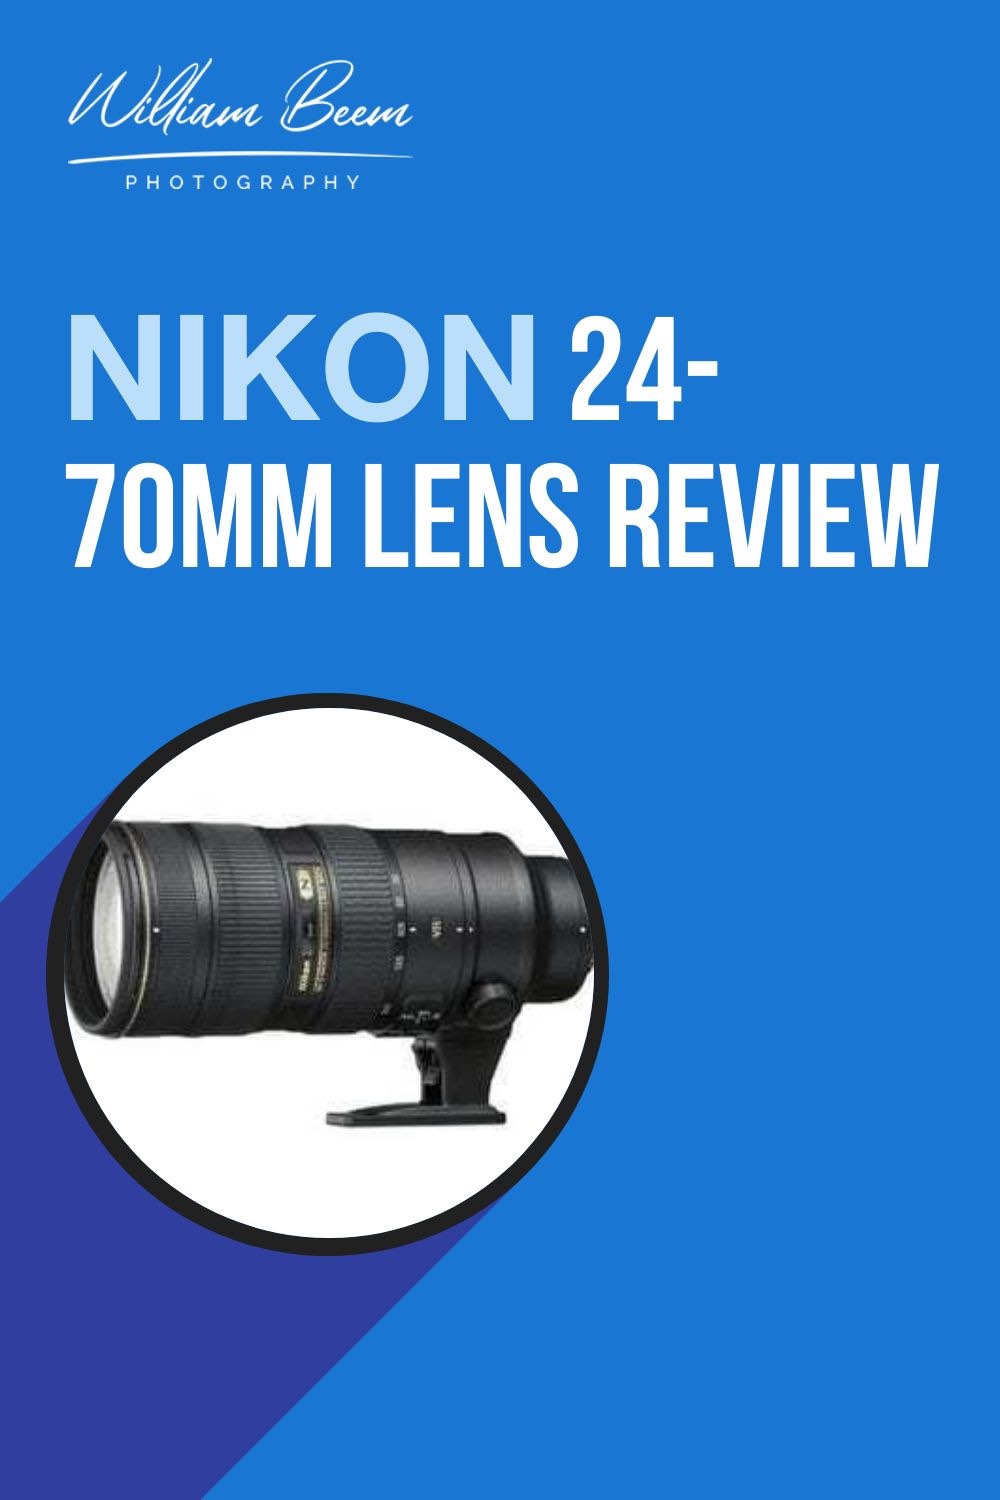 Nikon 24-70mm Lens Review